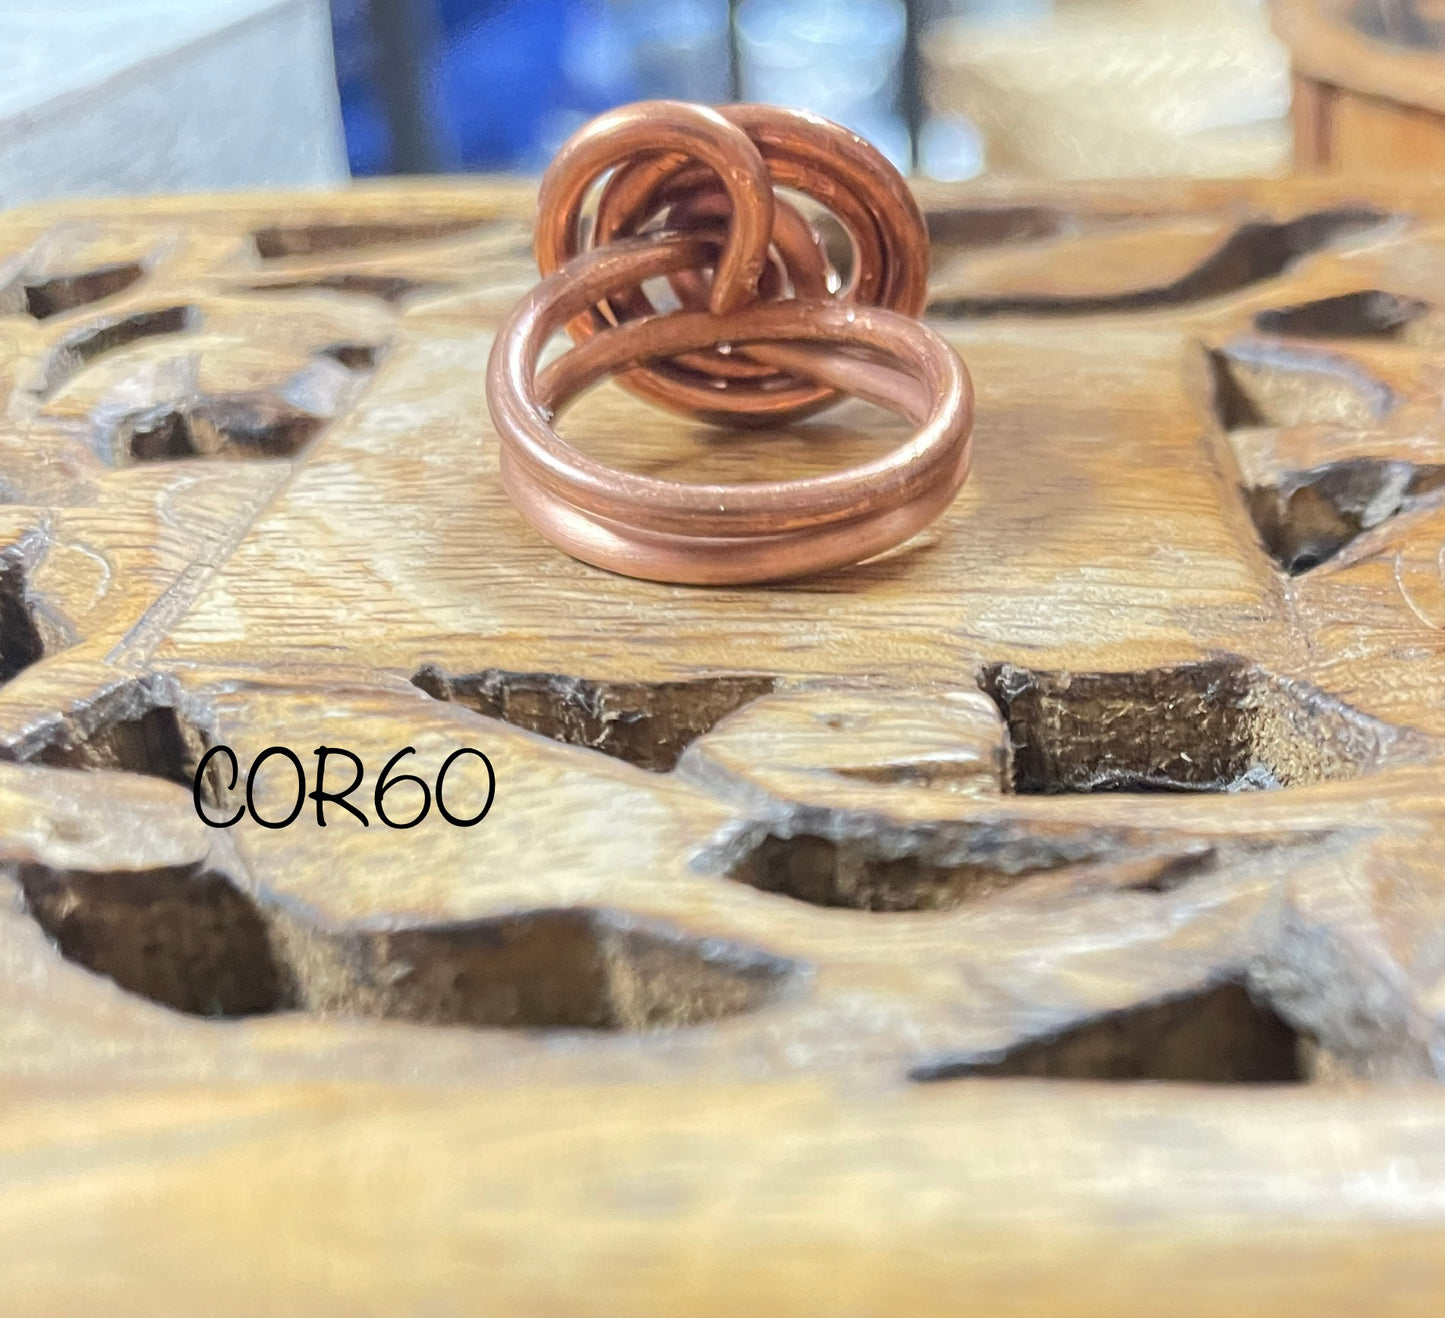 Copper Spiral Ring